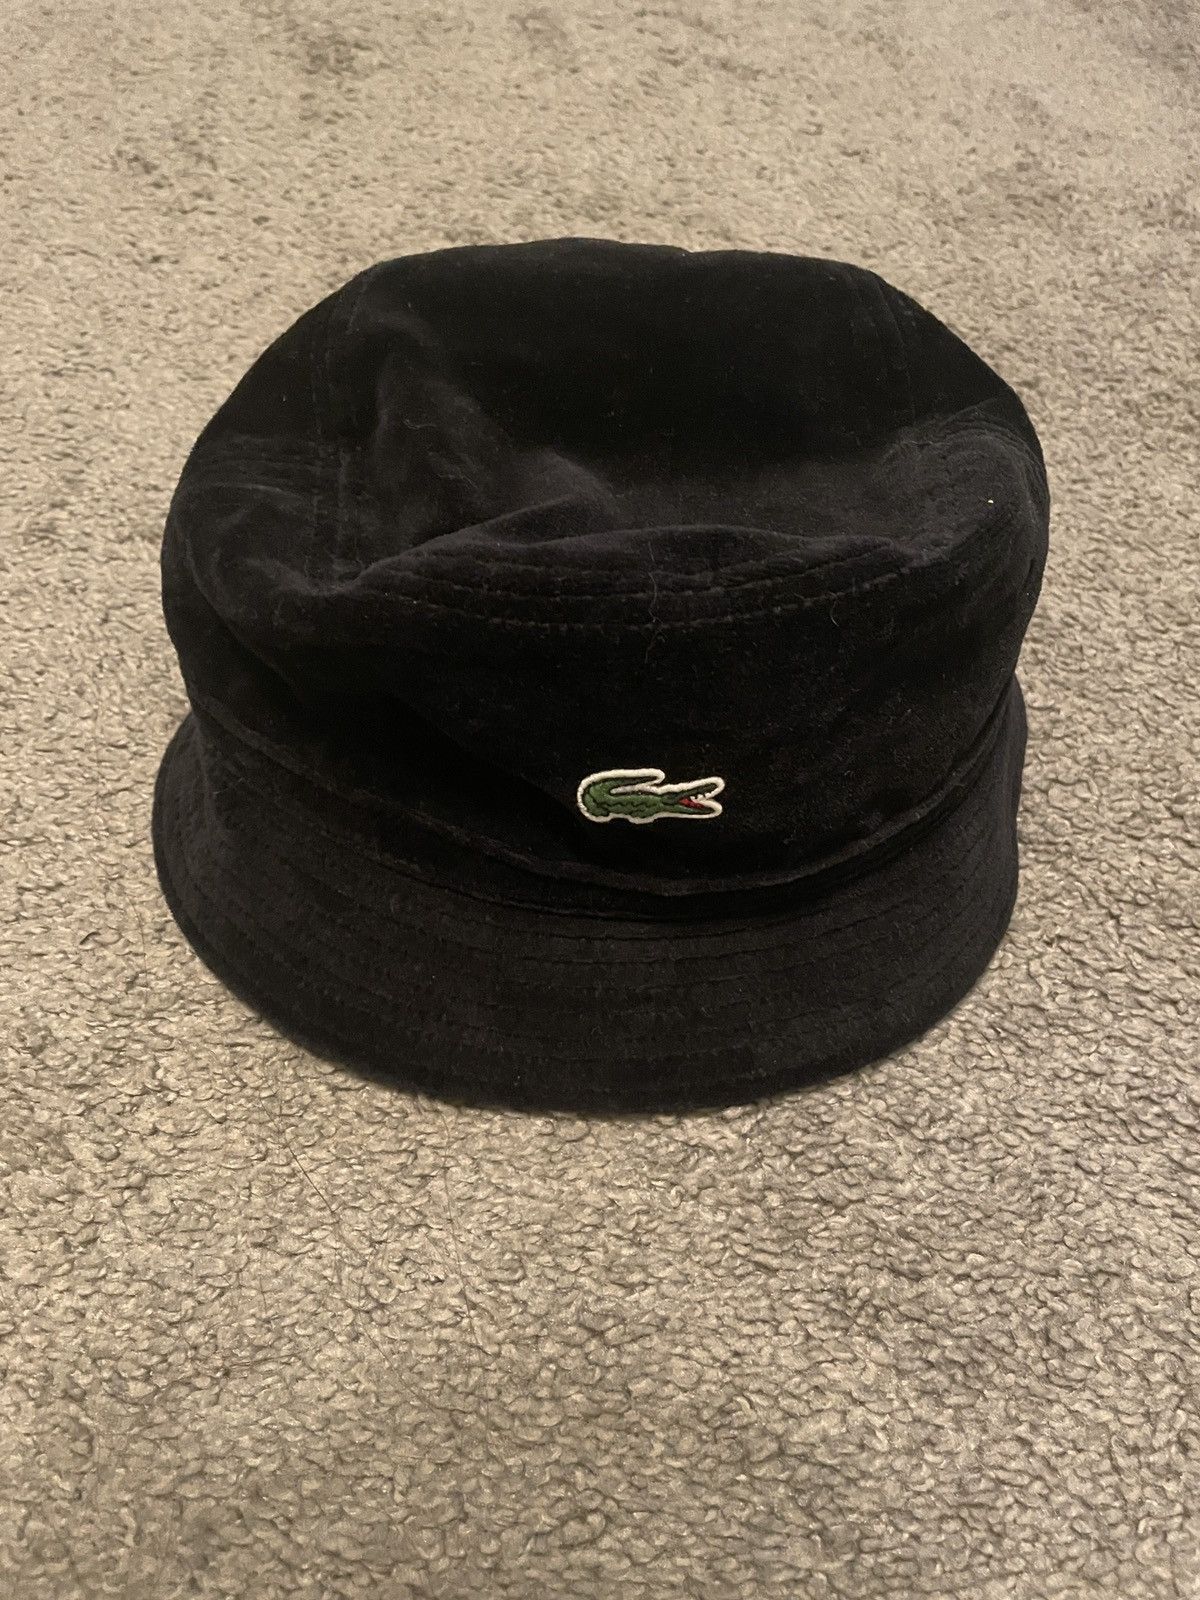 Supreme Supreme X Lacoste Velour Crusher Hat Medium | Grailed